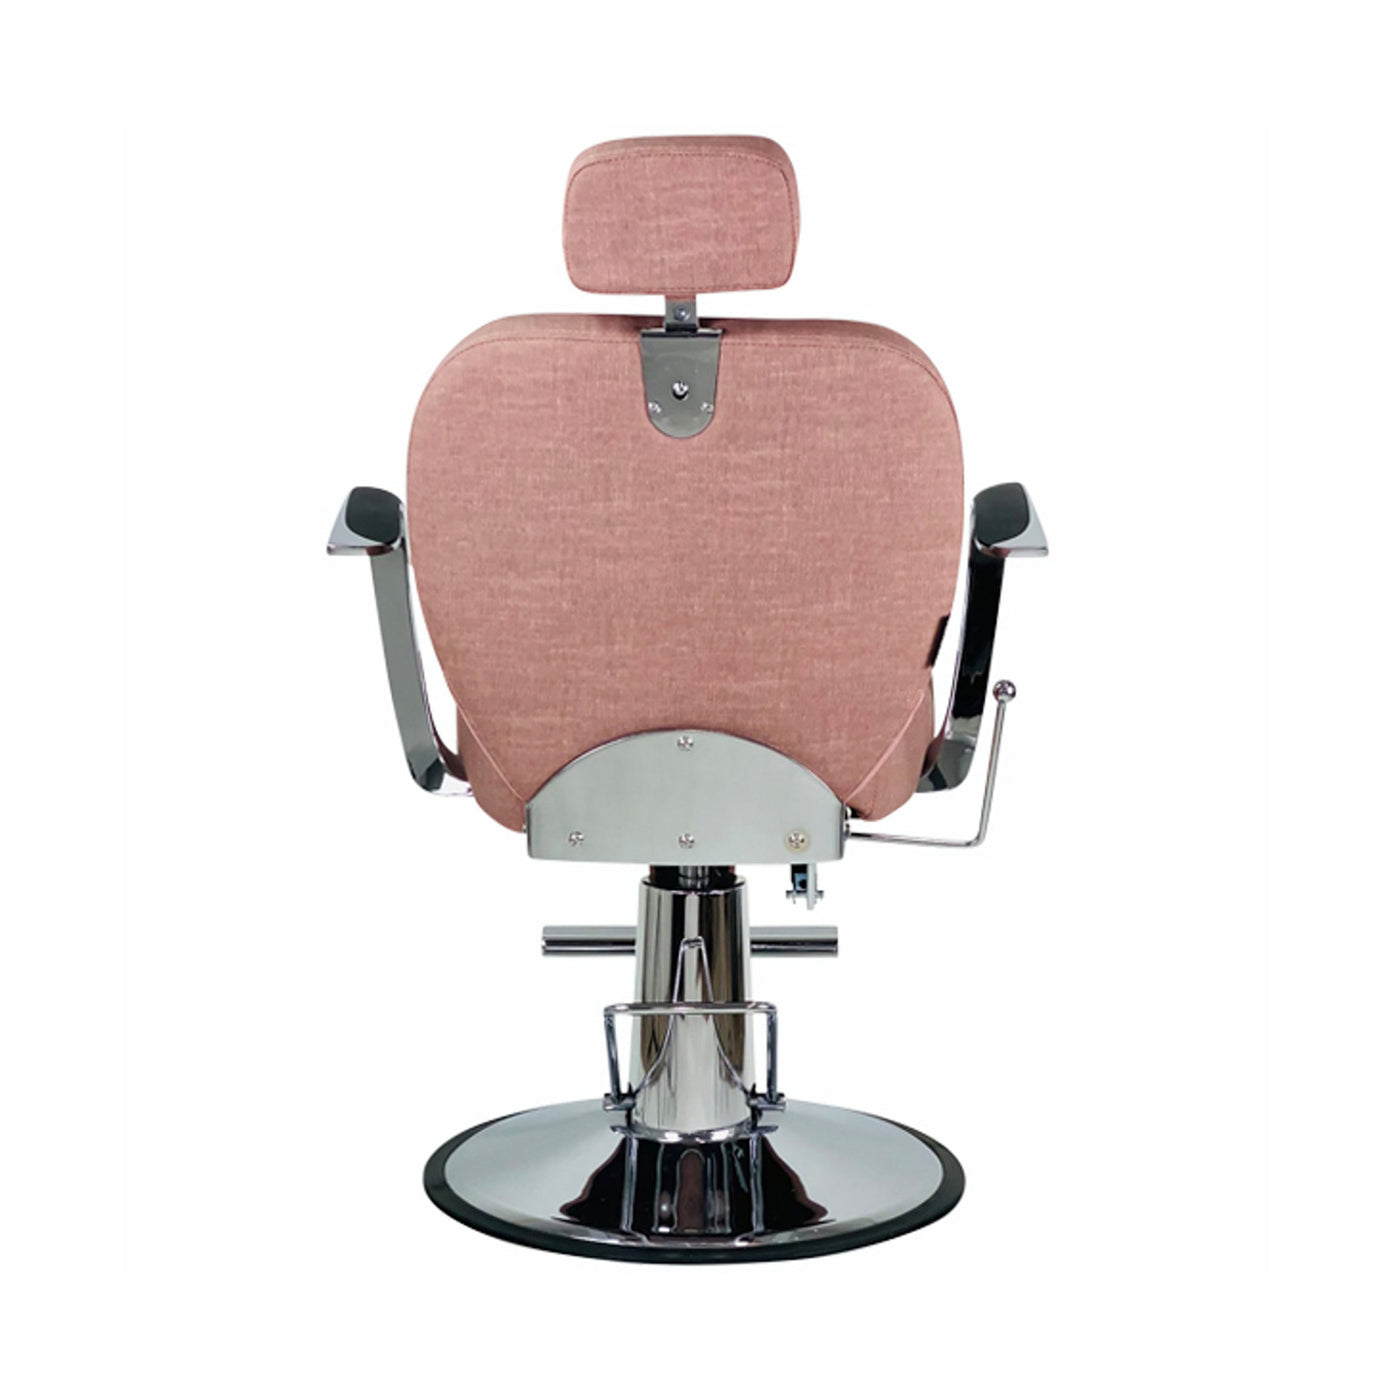 Joiken Titan Reclining Brow & Styling Chair - Dusty Pink back